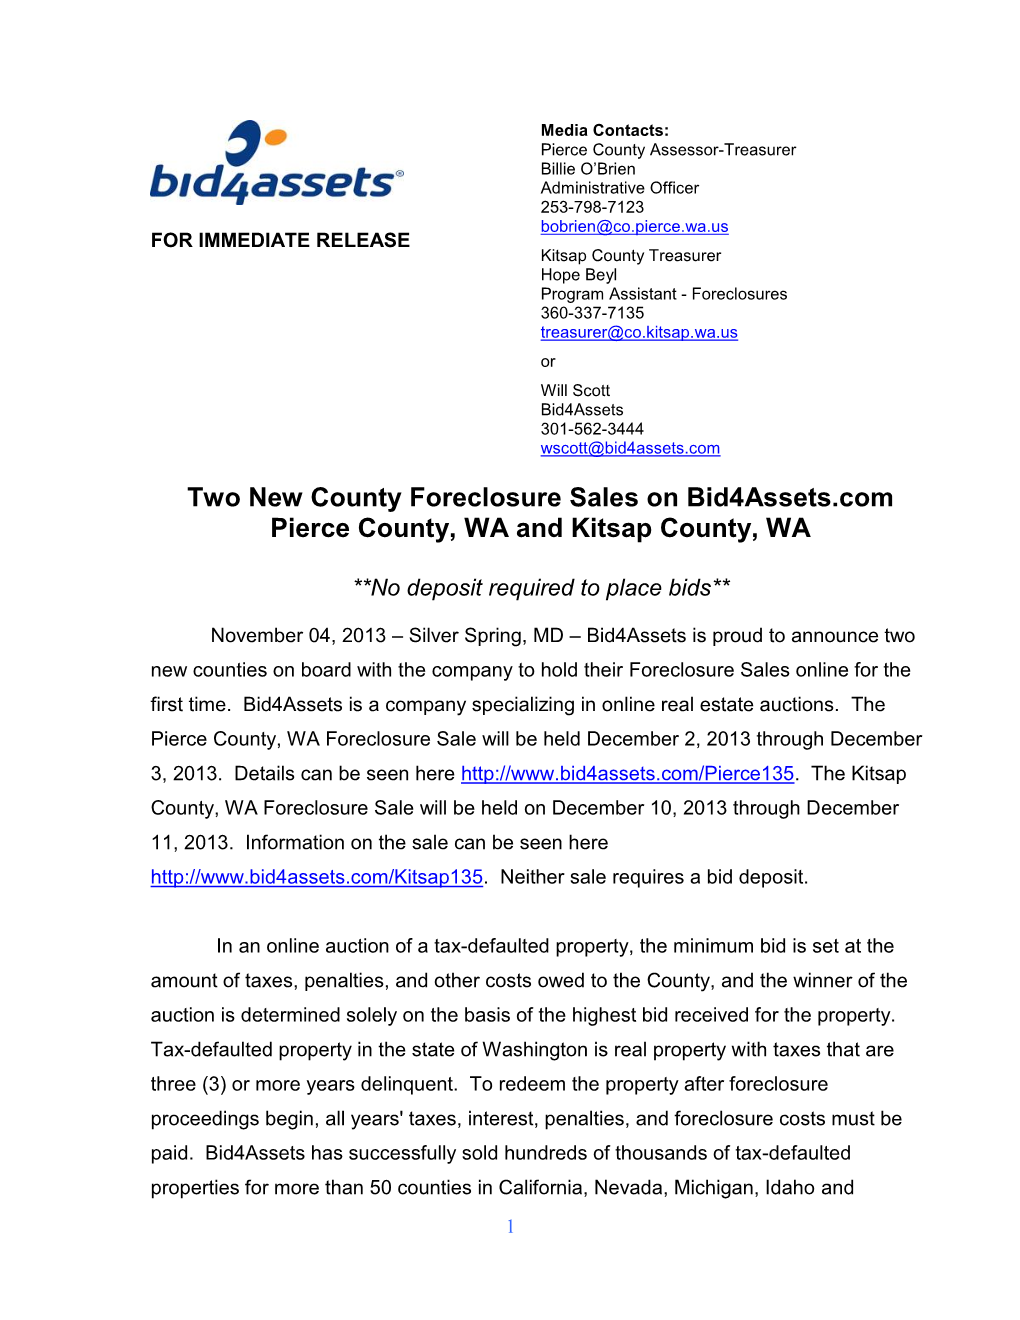 Two New County Foreclosure Sales on Bid4assets.Com Pierce County, WA and Kitsap County, WA